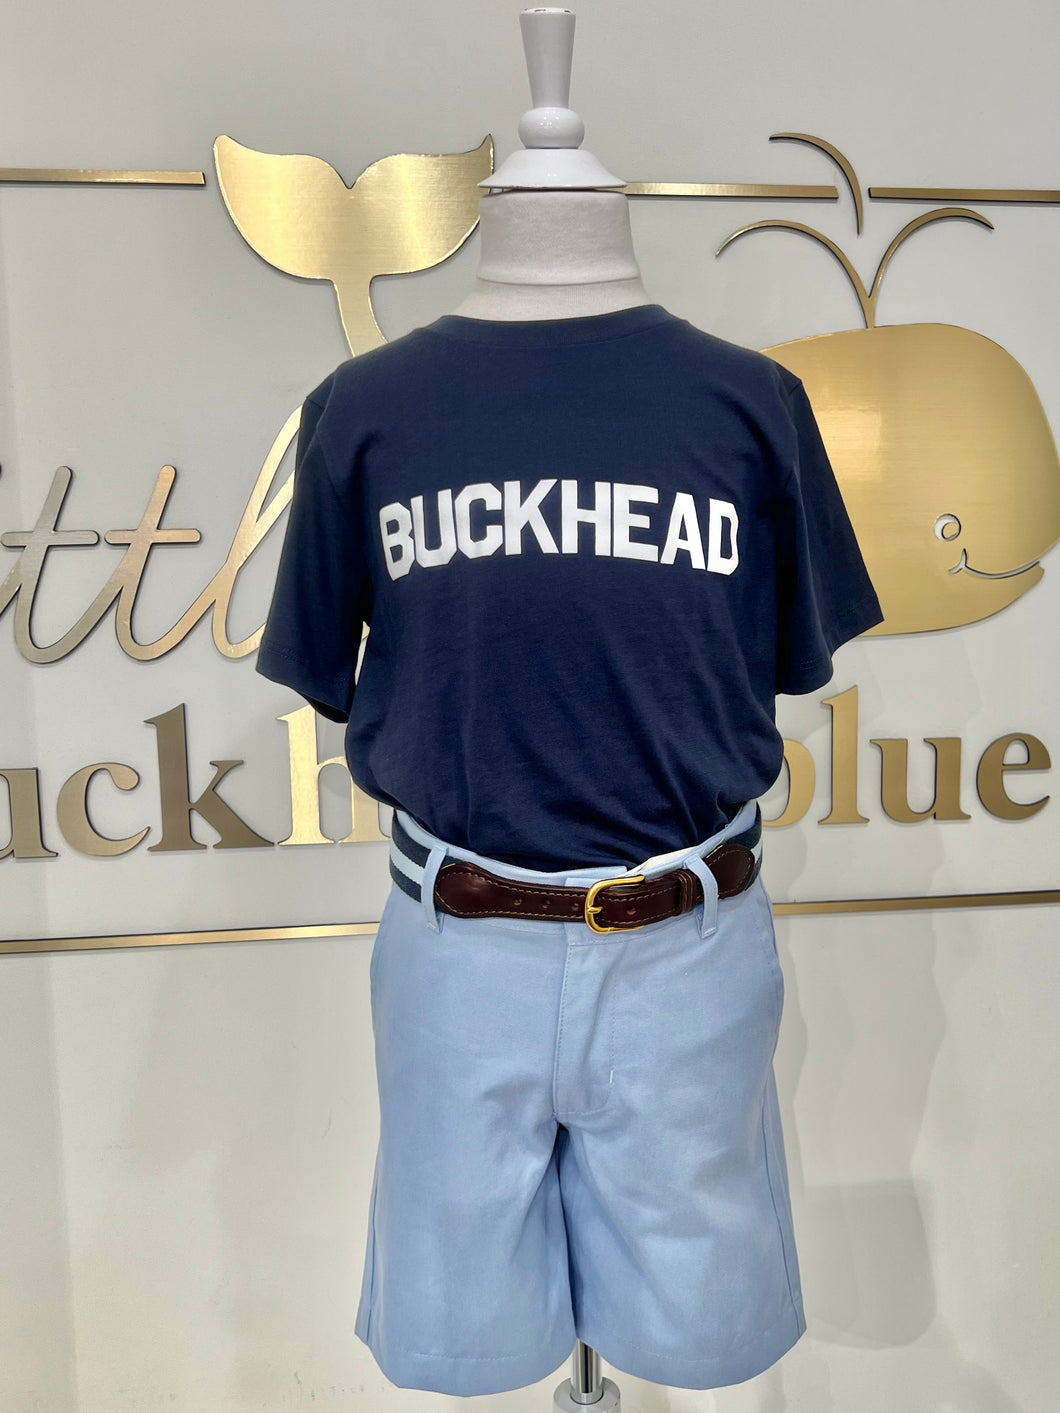 Sir Proper's City Hopper T Shirt Buckhead